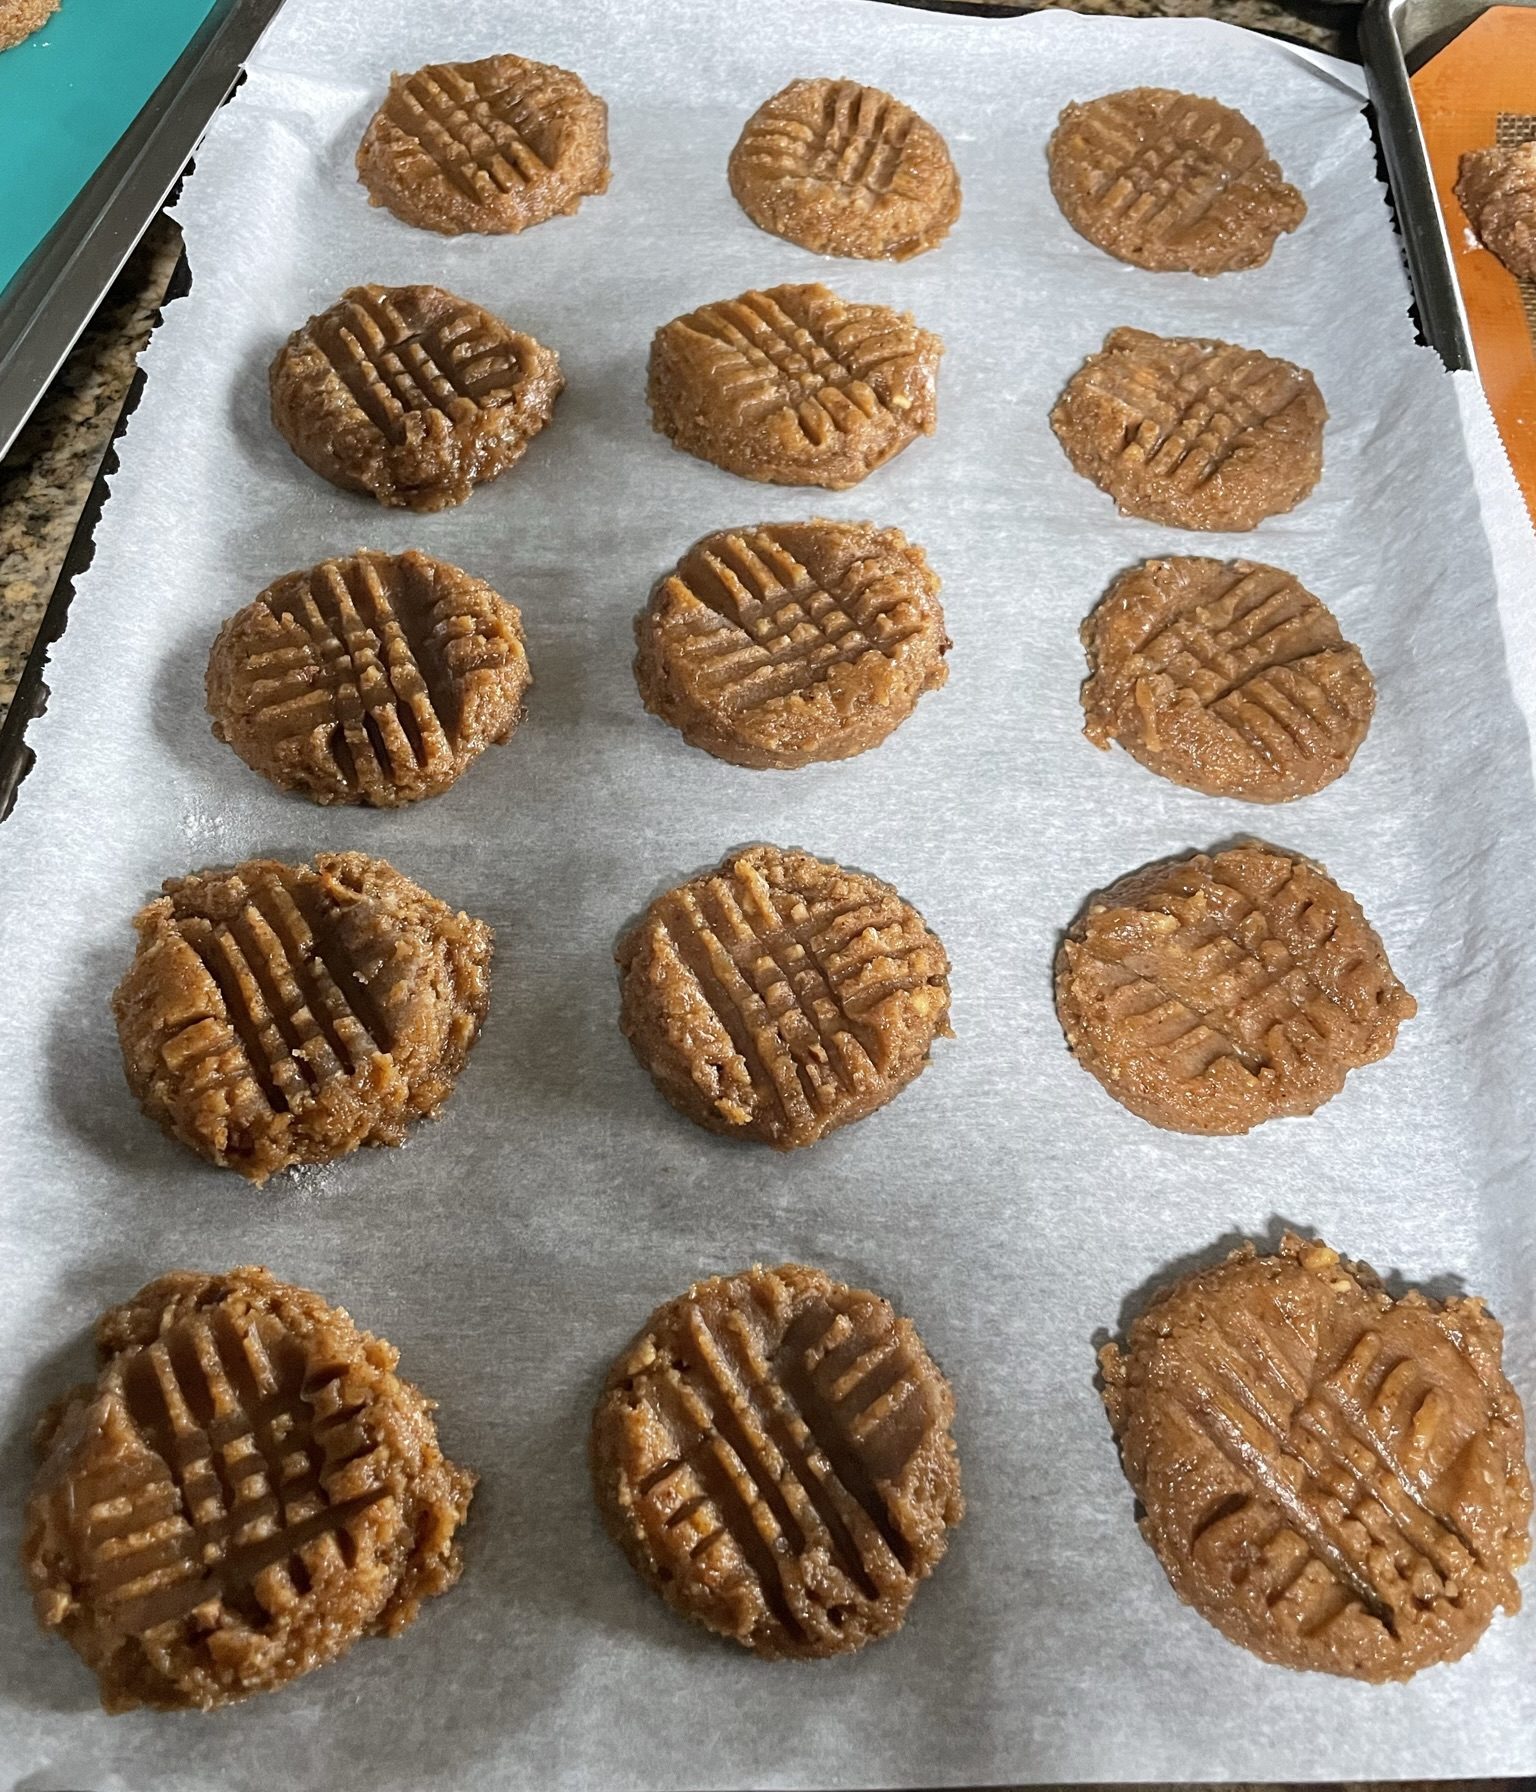 Sourdough almond butter cookies ready for baking.